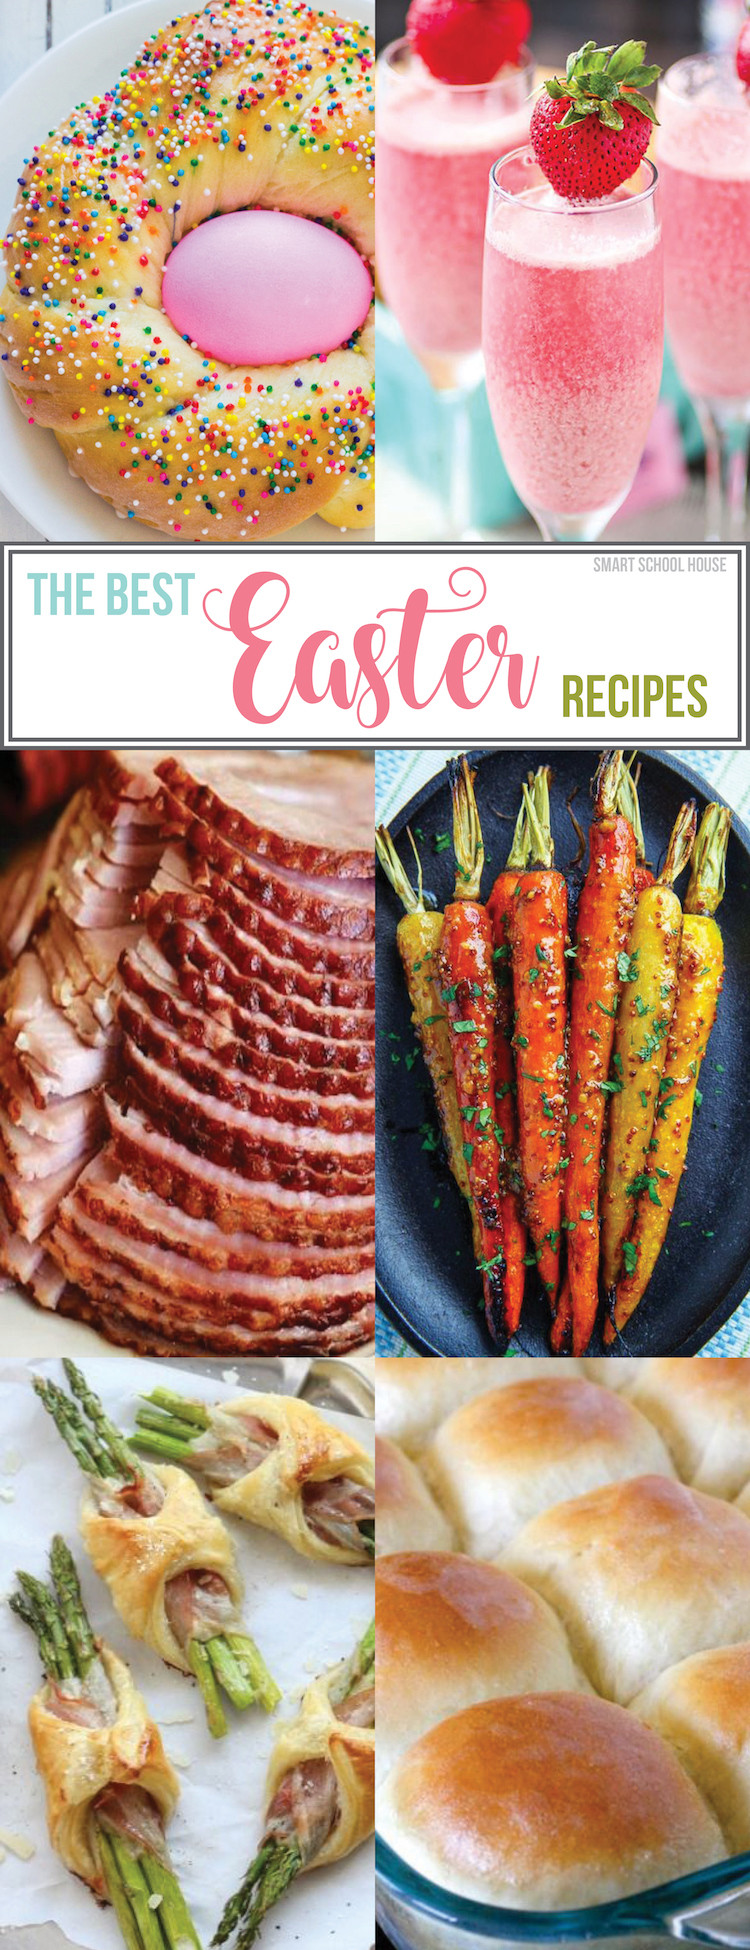 Best Easter Dinner Recipes
 The Best Easter Recipes Smart School House